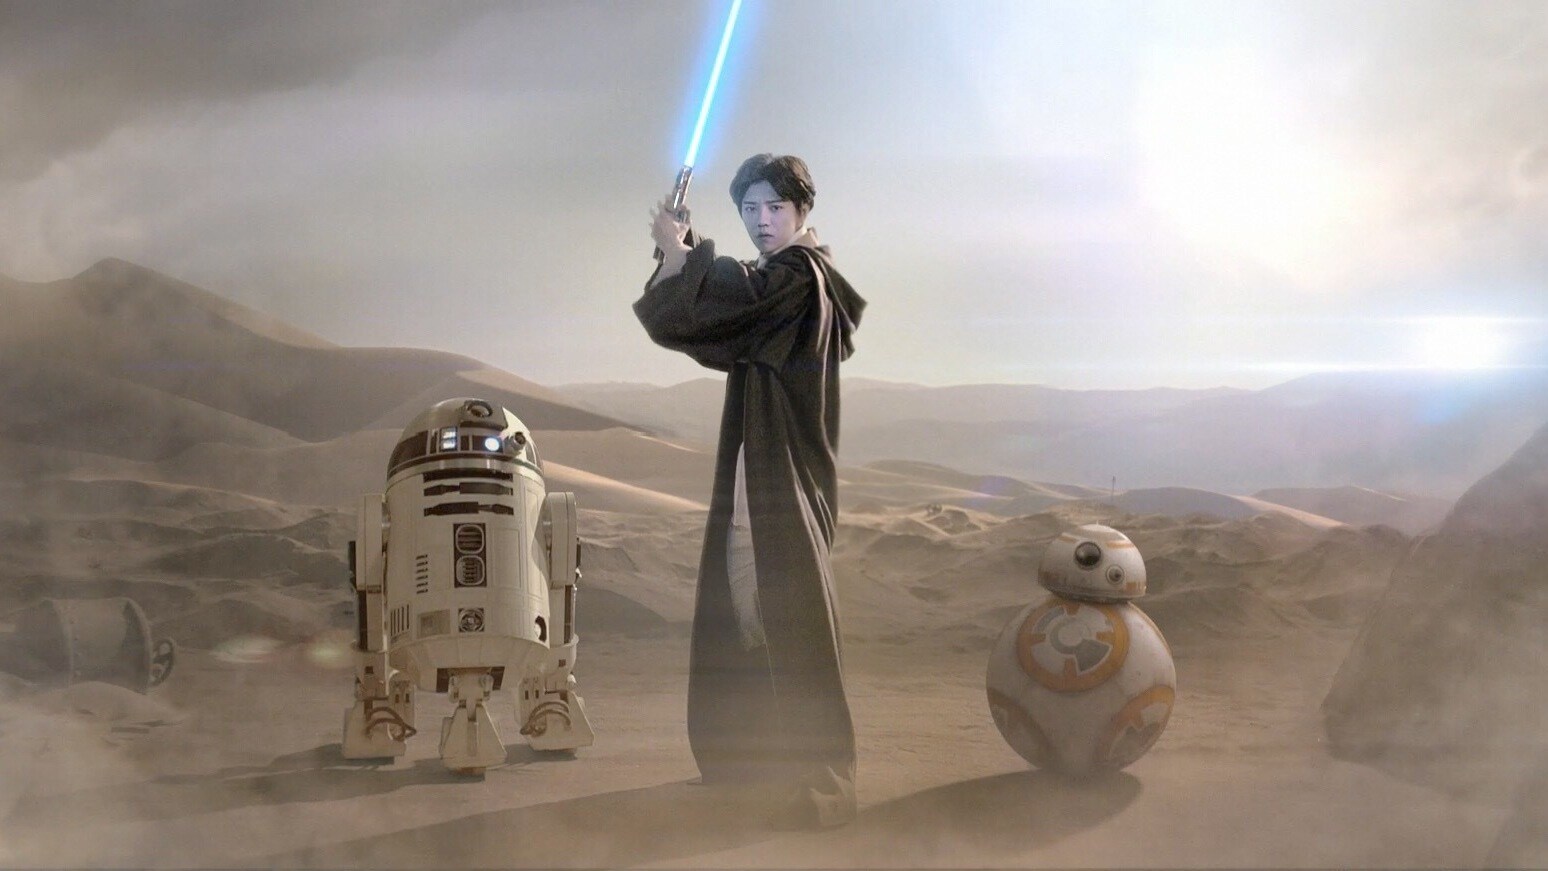 LuHan - Star Wars: The Force Awakens China promo